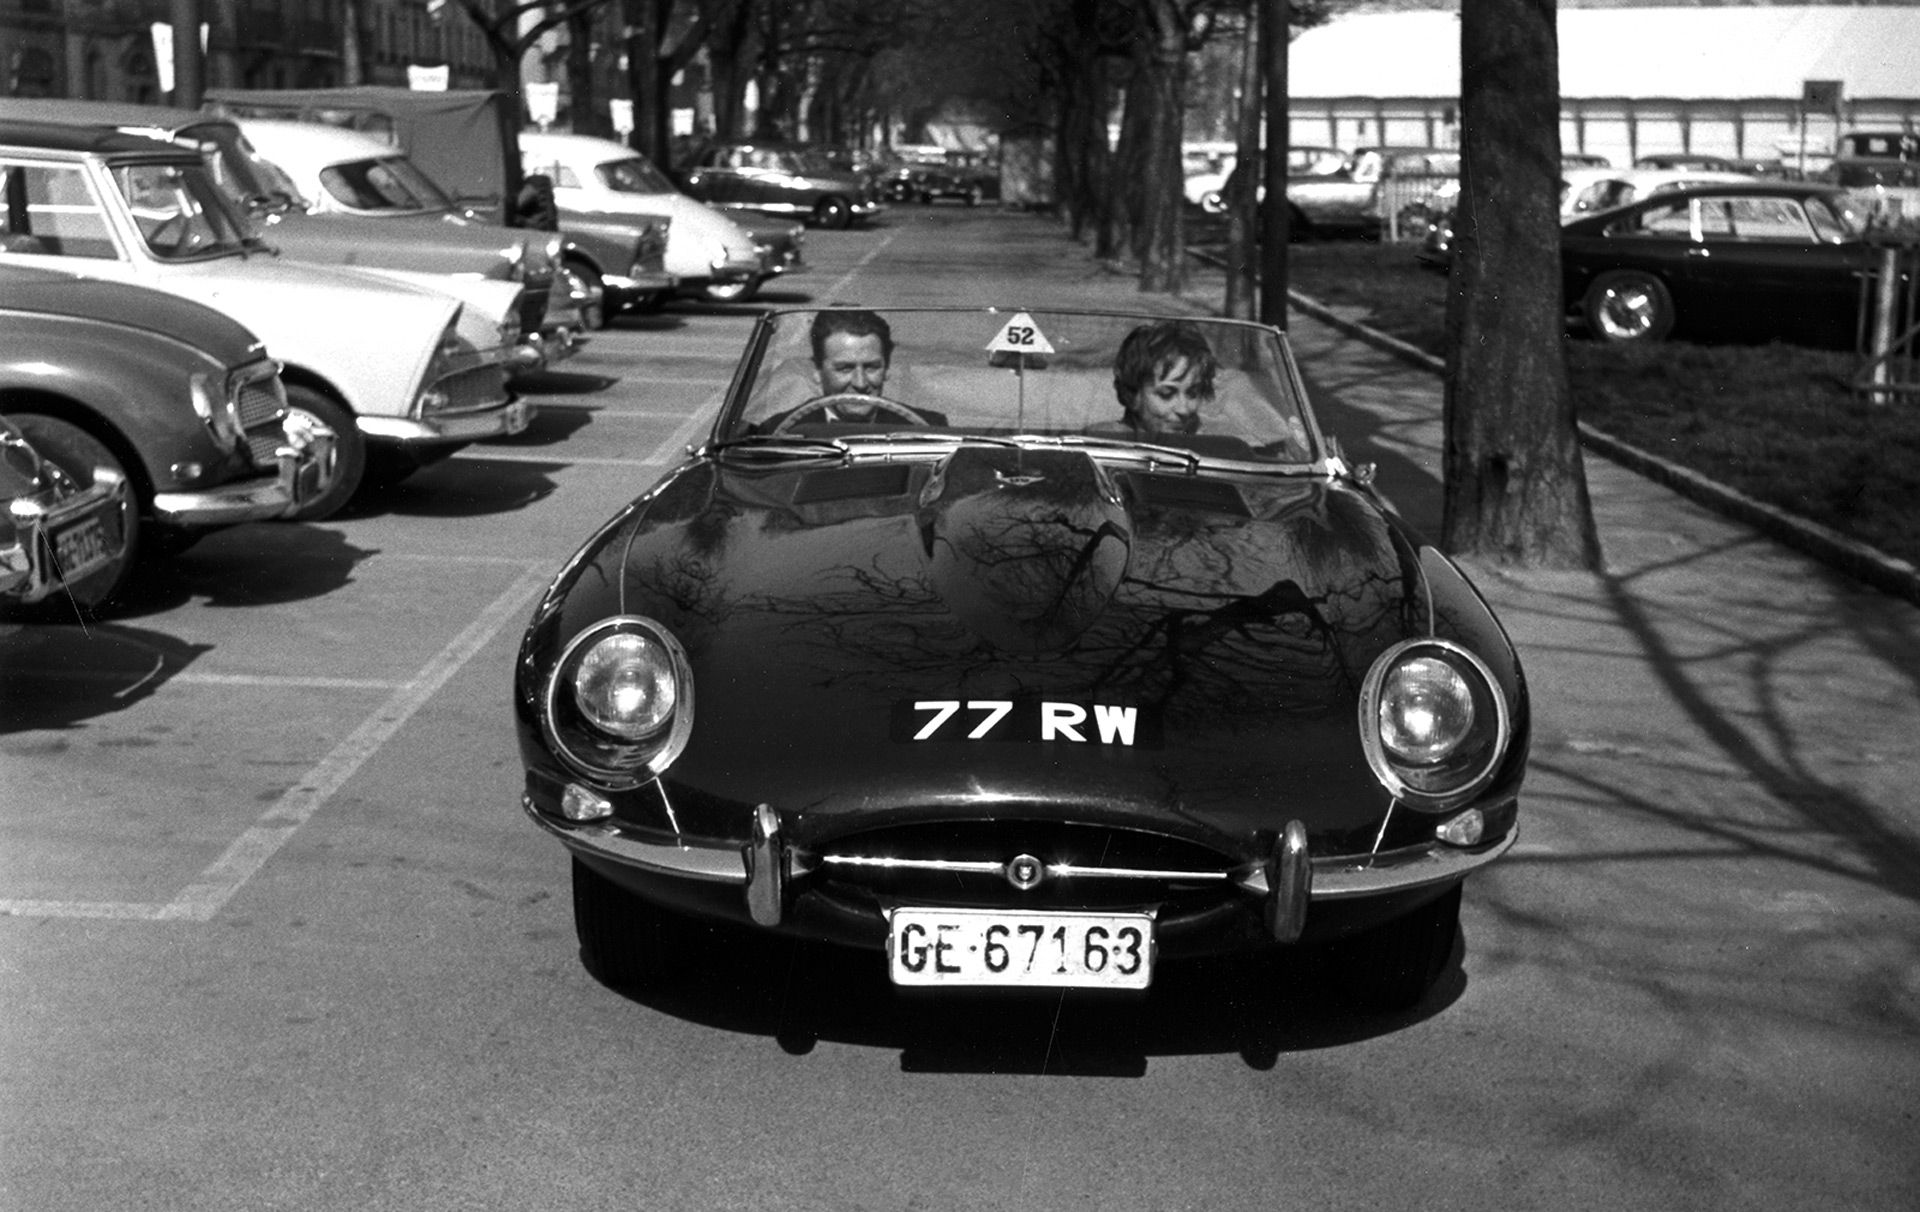 1961 Jaguar E-Type registered 77 RW